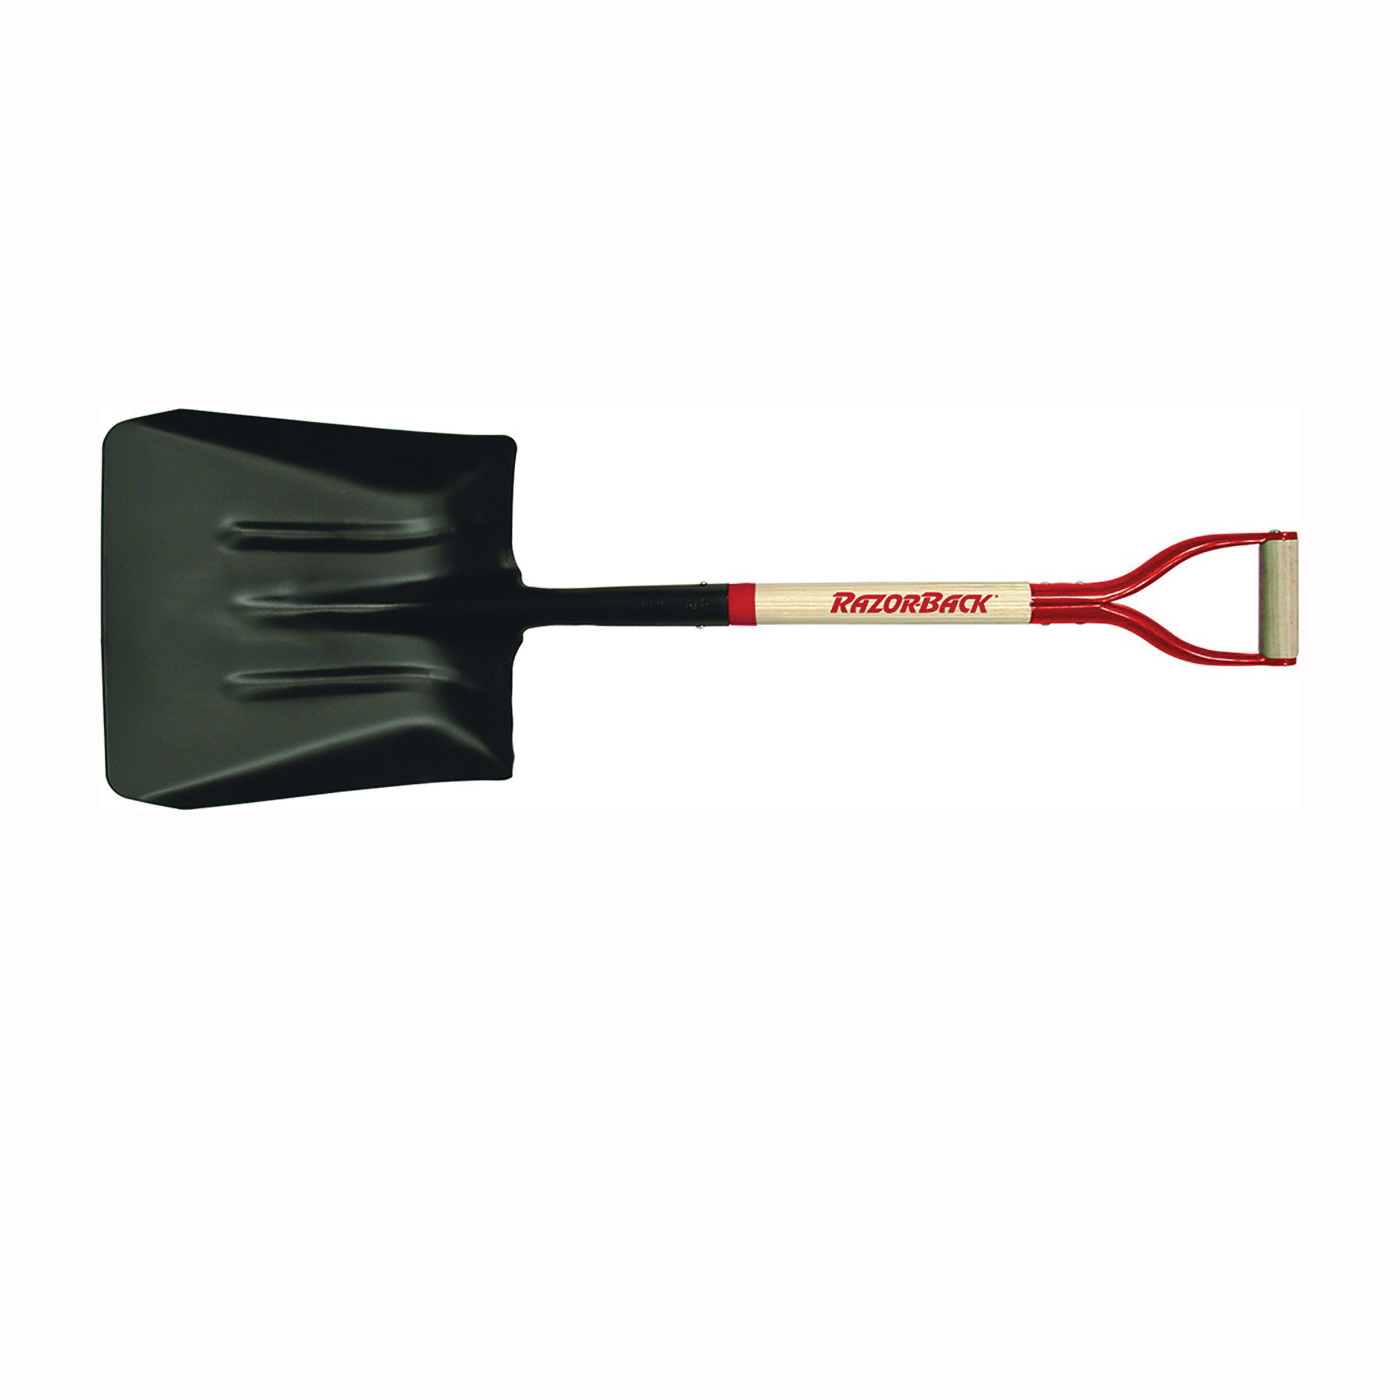 54109 Coal and Street Shovel, 13-1/2 in W Blade, 14-1/2 in L Blade, Steel Blade, Hardwood Handle